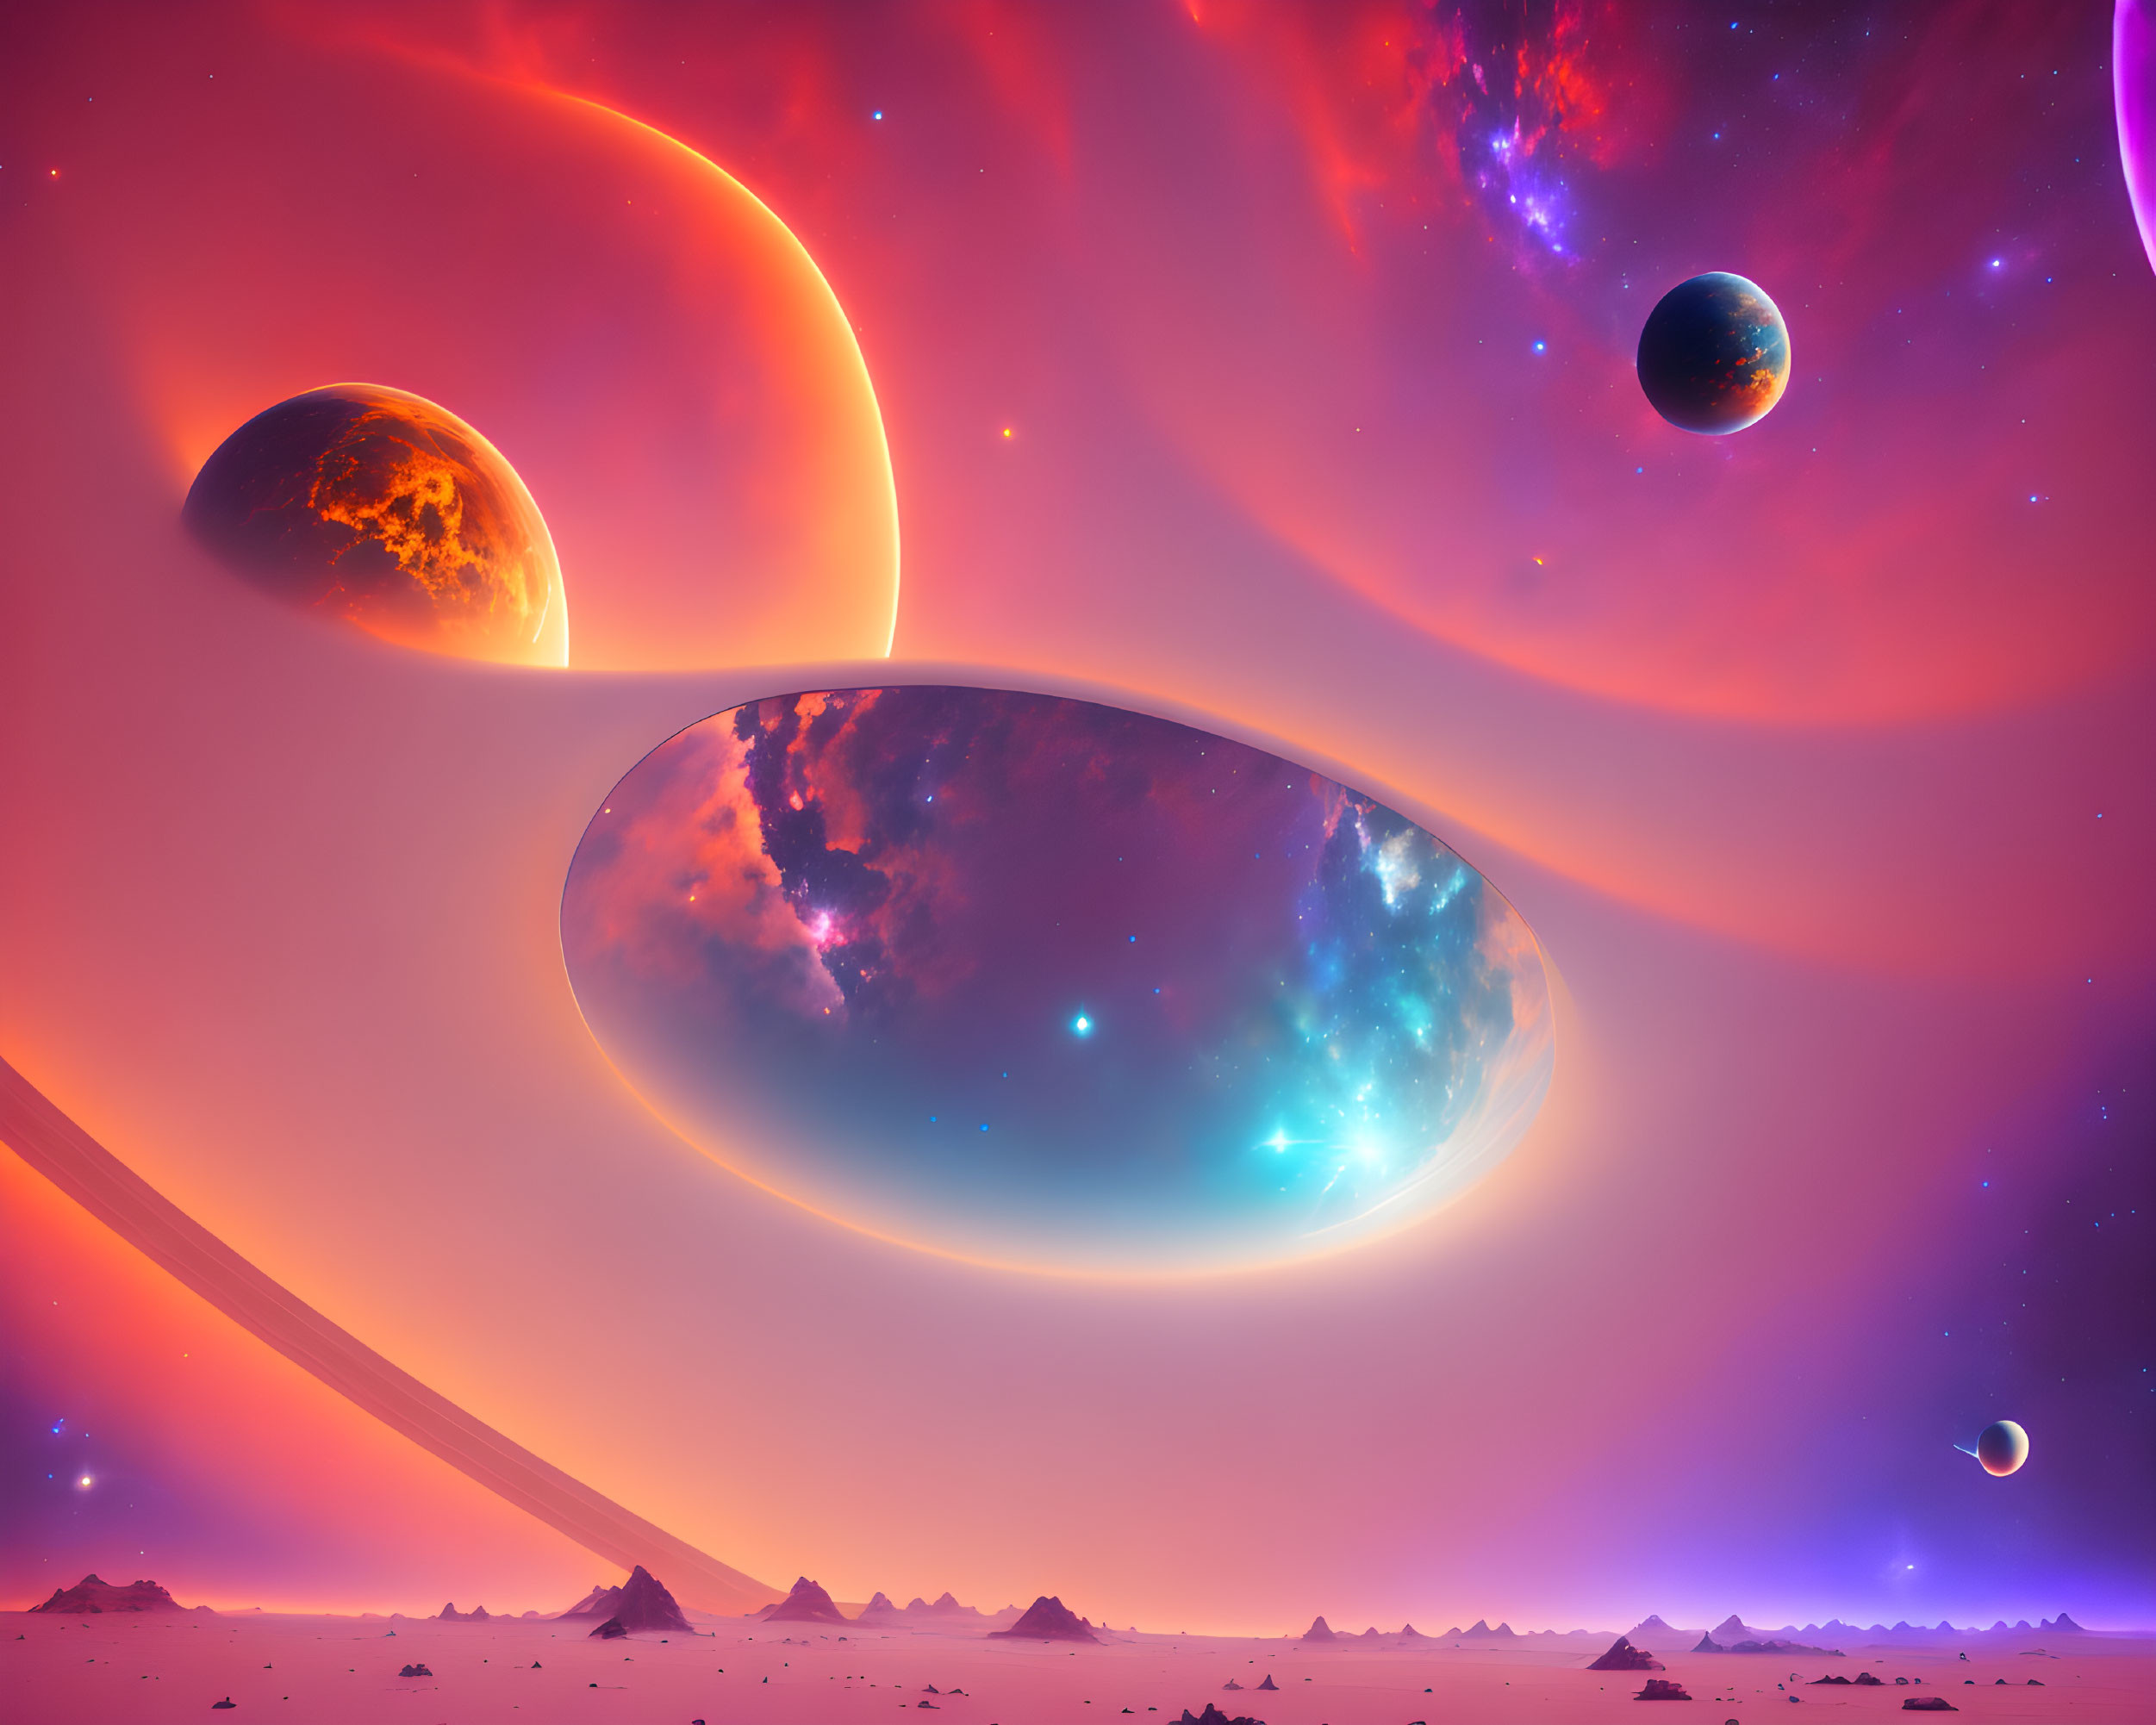 Celestial Dreamscape: A Cosmic Odyssey